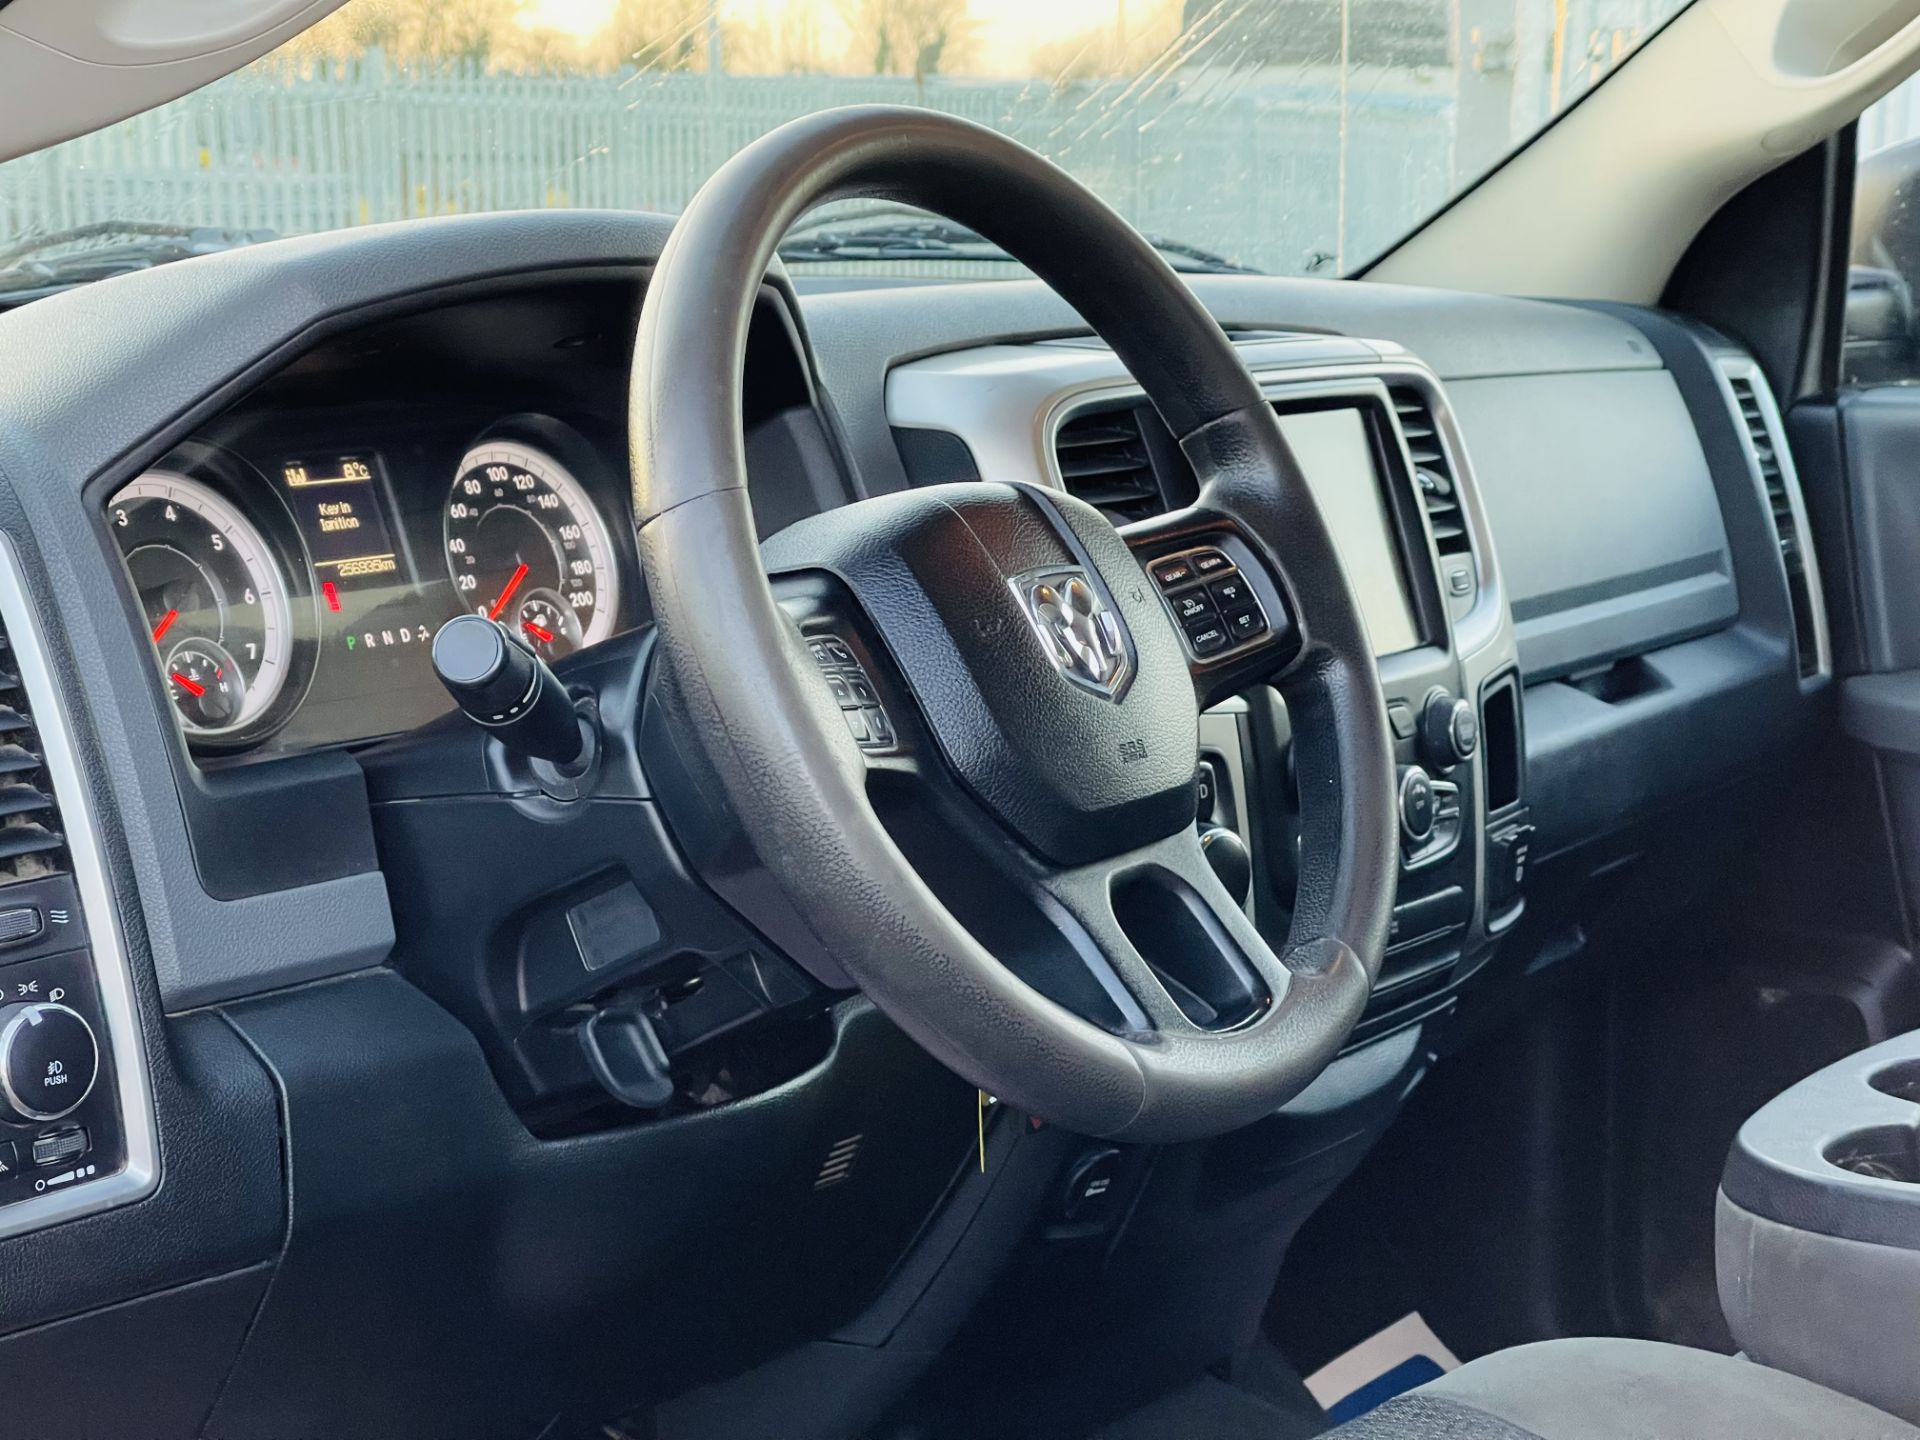 Dodge Ram 3.5L V6 1500 Crew Cab SLT ' 2015 Year ' A/C - 6 Seats - Chrome Package - ULEZ Compliant - Image 11 of 31